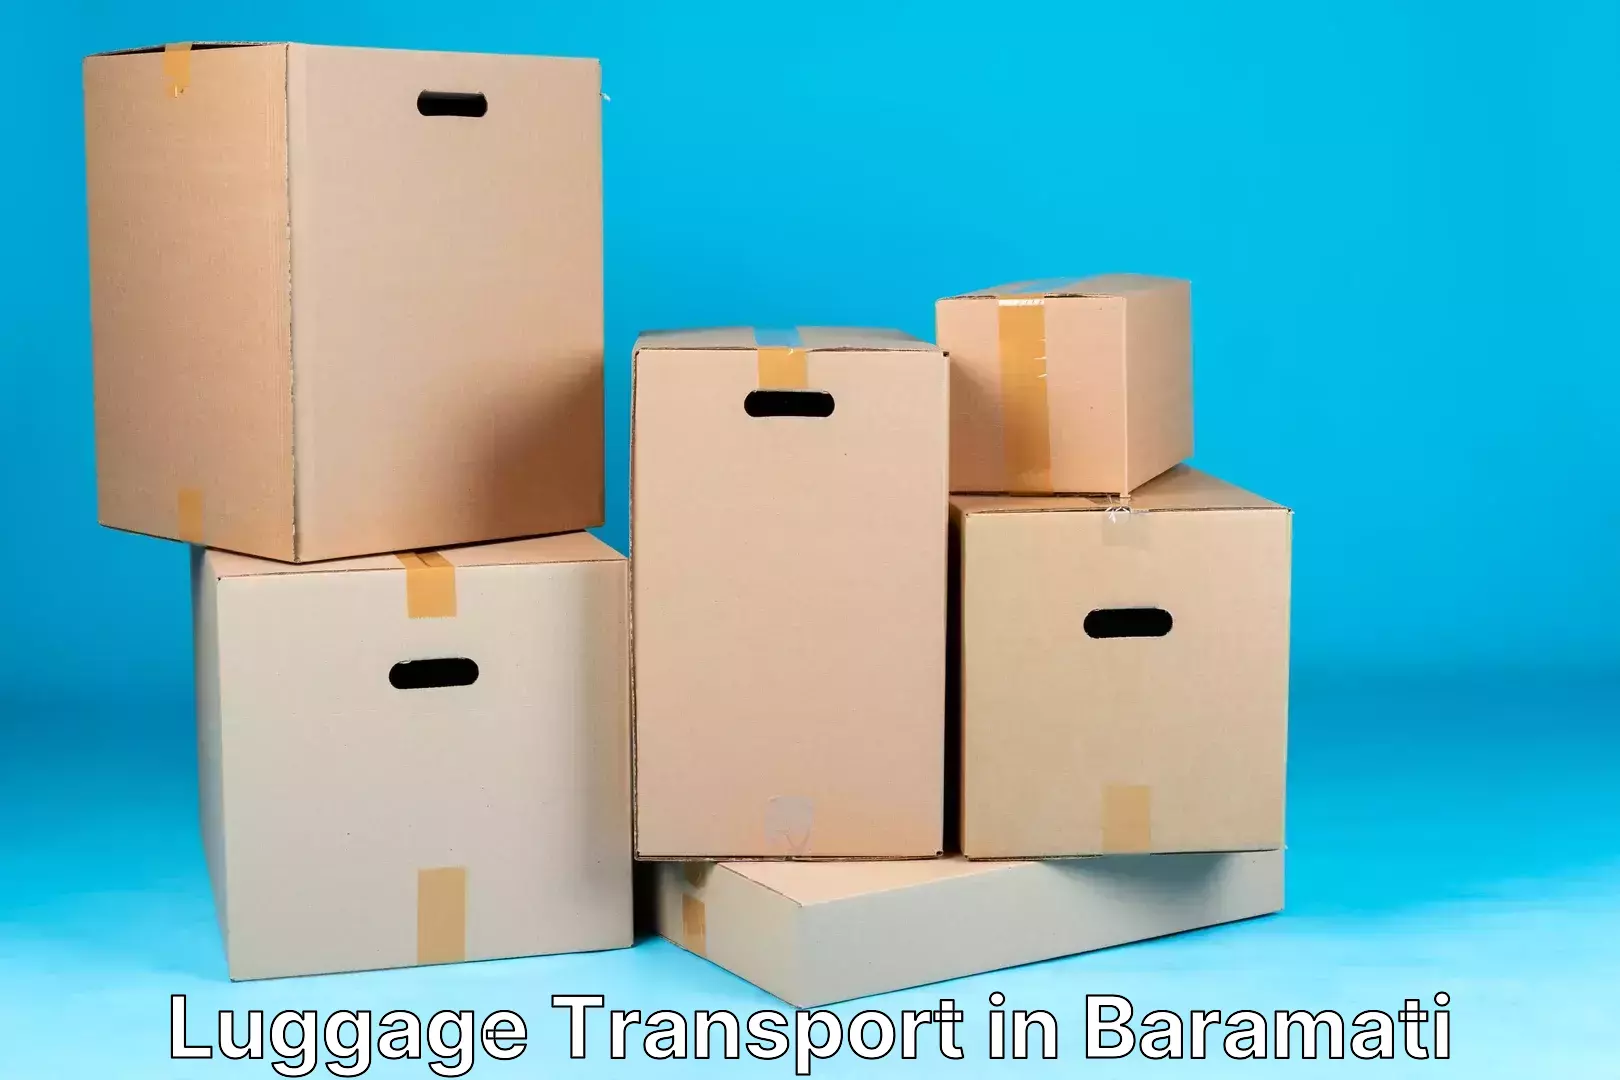 Luggage shipment tracking in Baramati